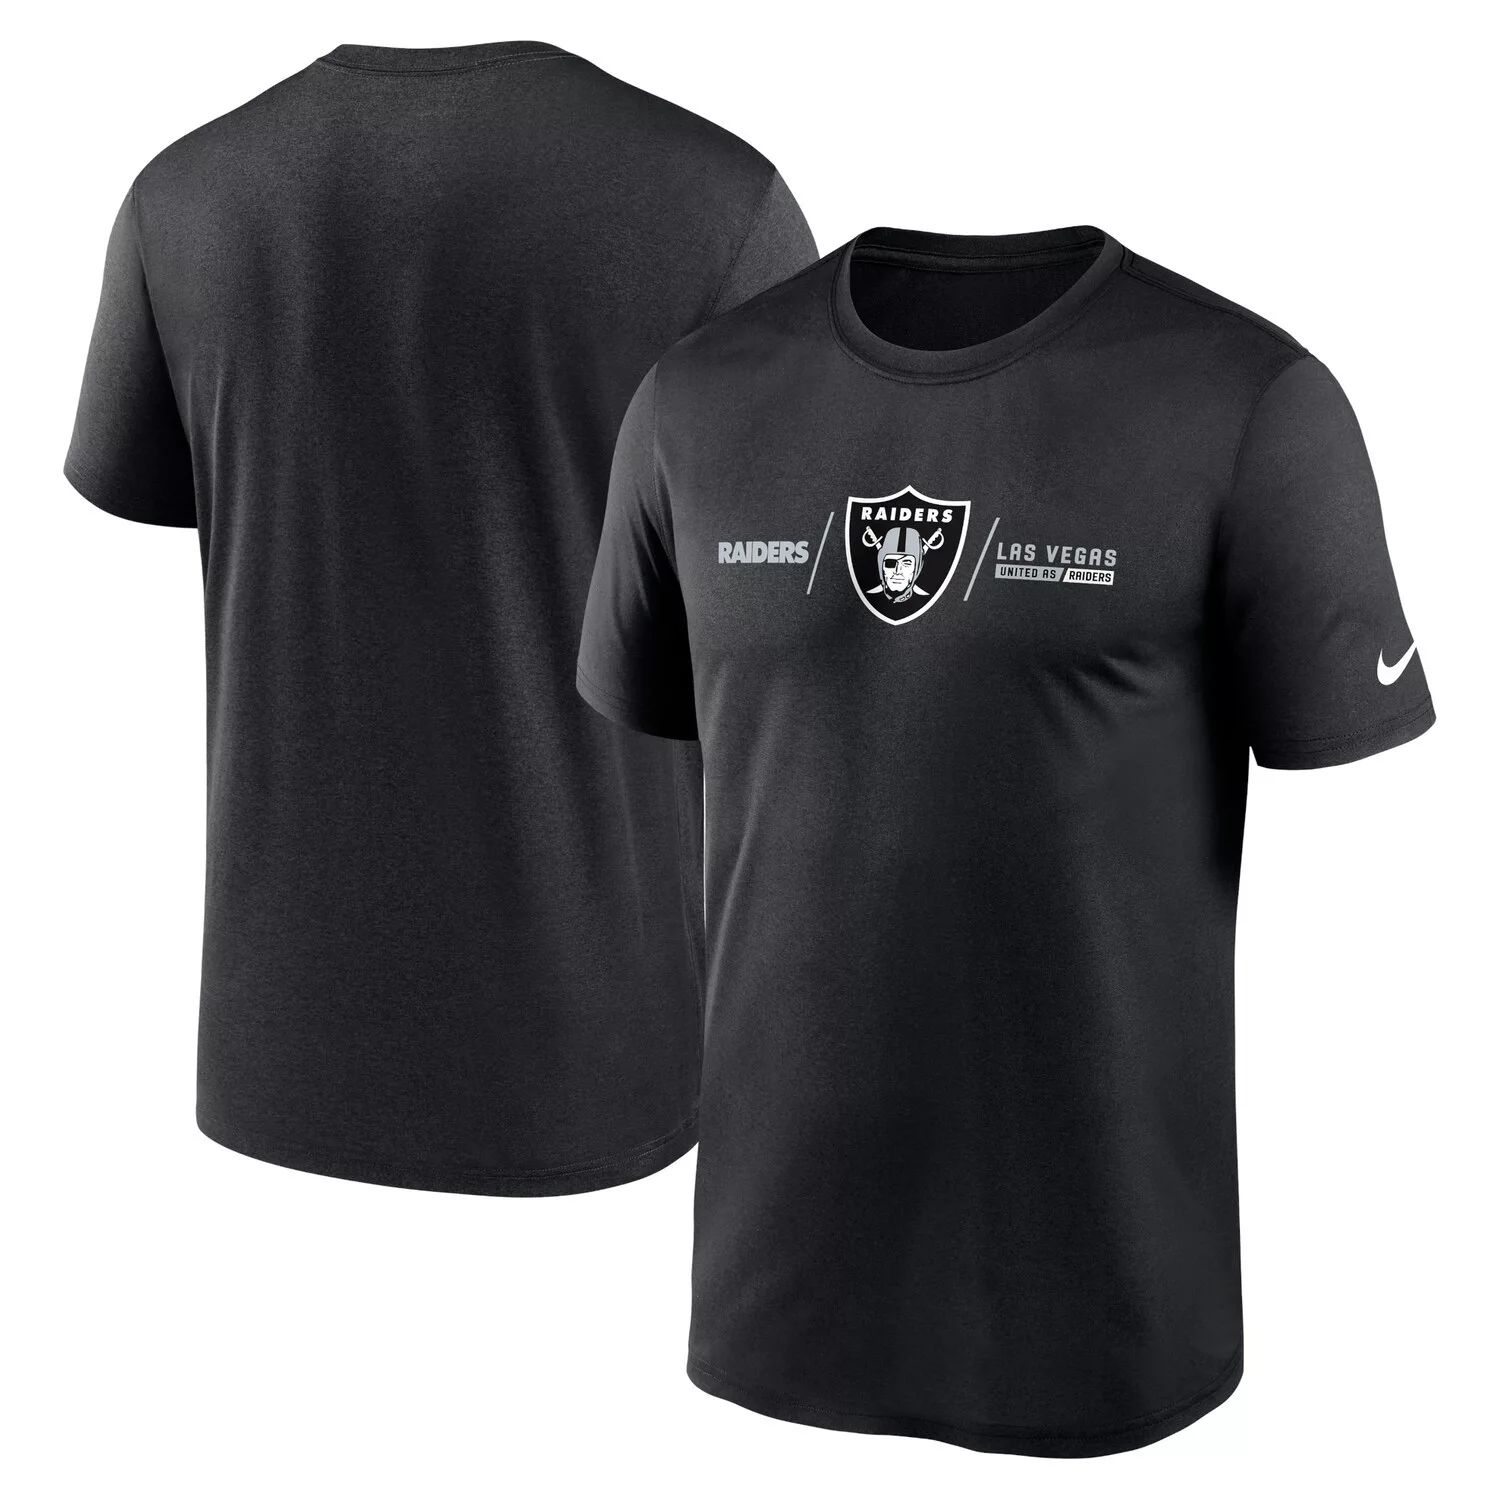 мужская черная футболка las vegas raiders horizontal lockup legend nike черный Мужская черная футболка Las Vegas Raiders Horizontal Lockup Legend Performance Nike